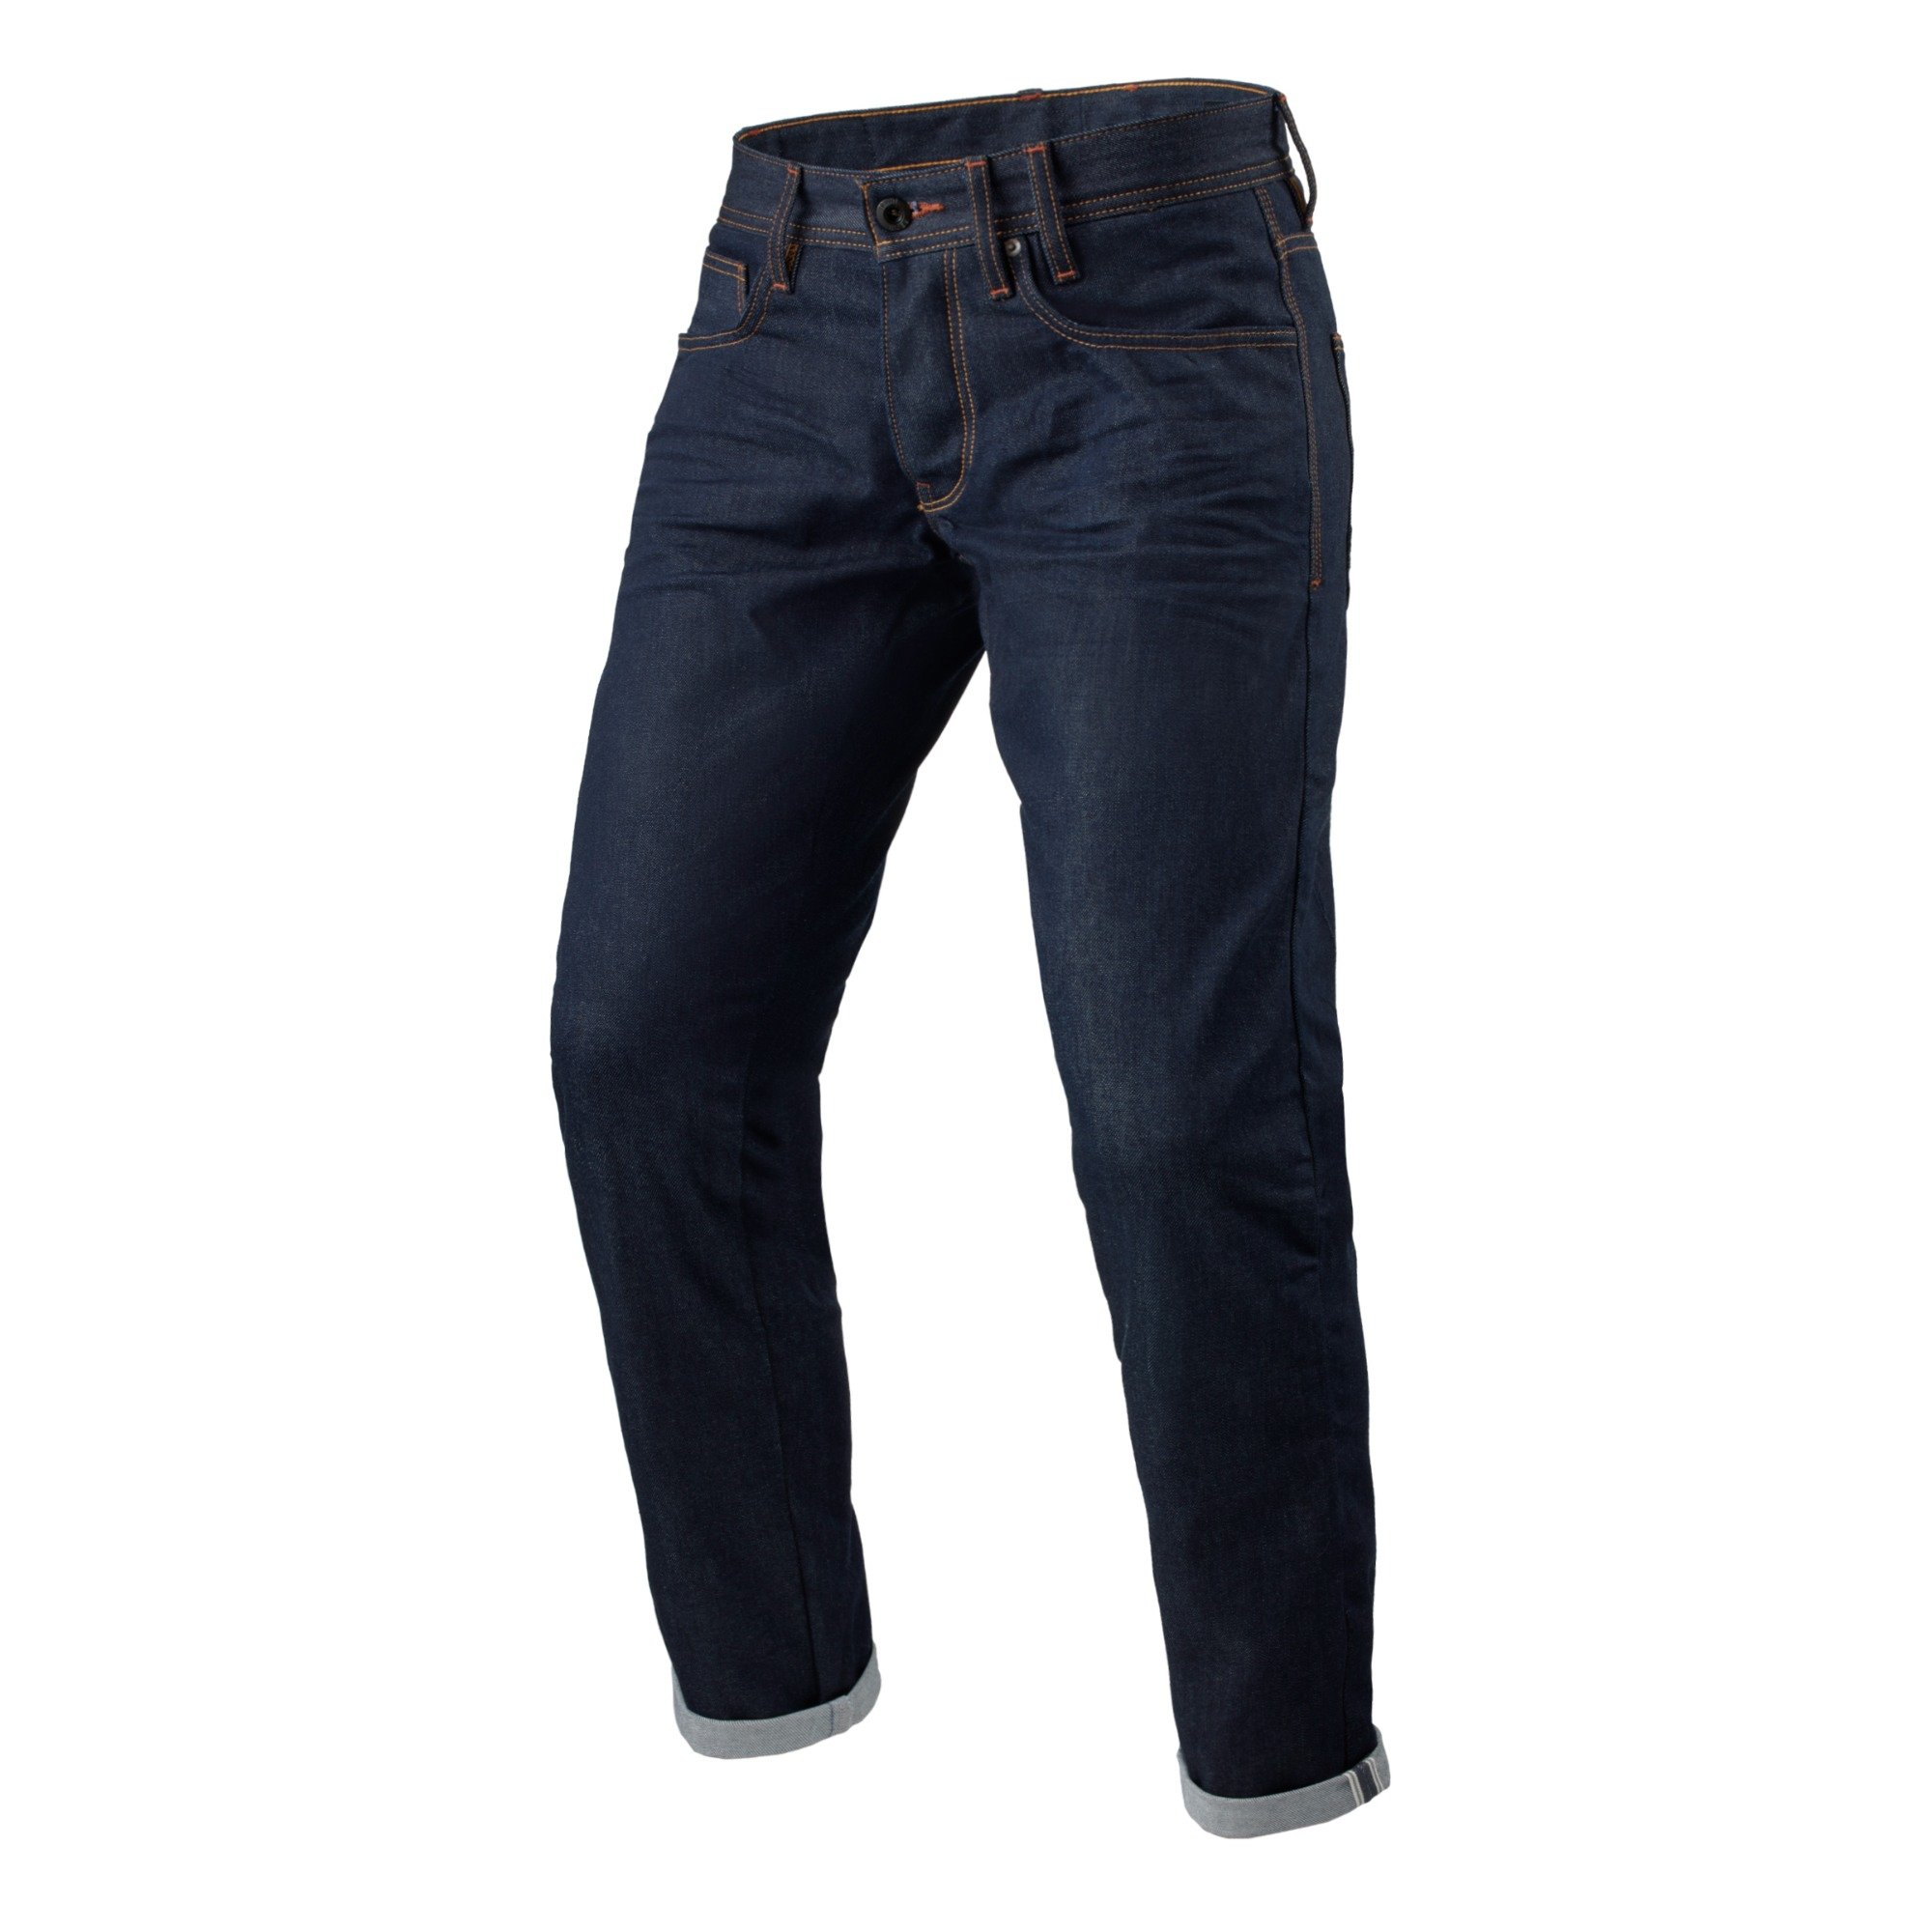 Image of REV'IT! Jeans Lewis Selvedge TF Dark Blue L34 Motorcycle Pants Size L34/W28 EN